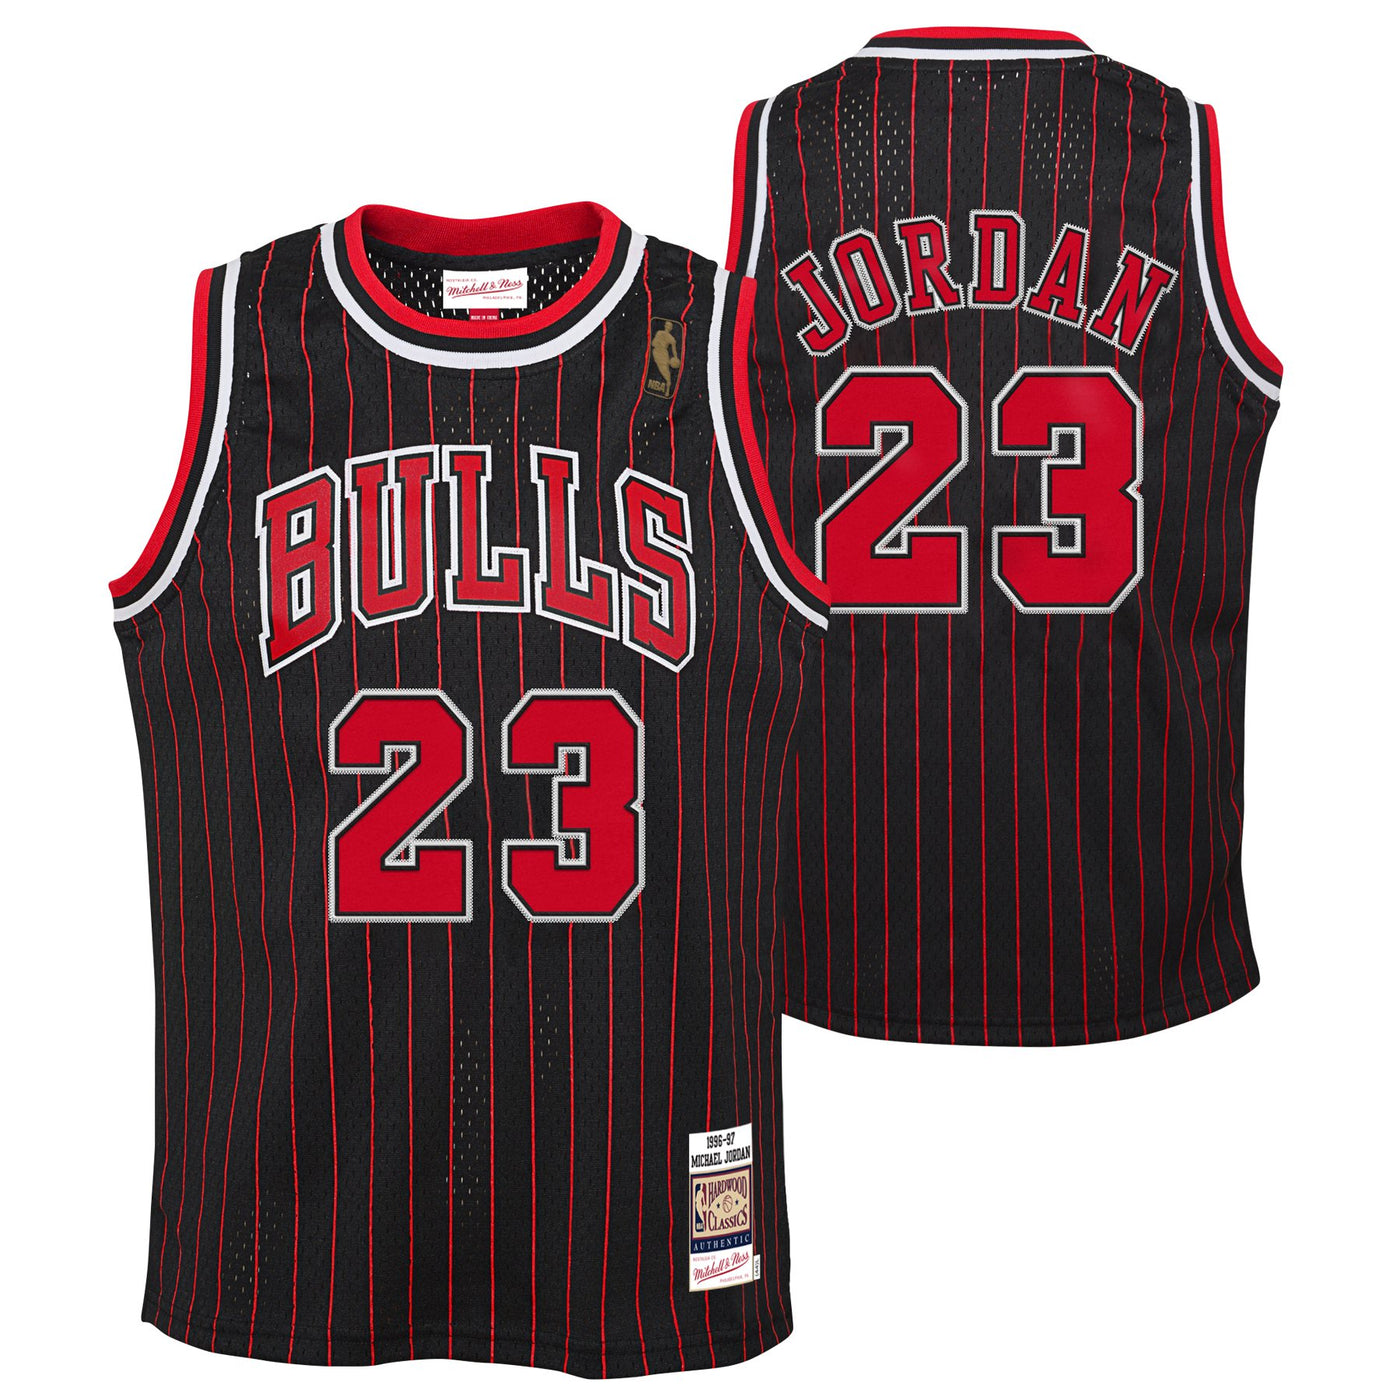 Chicago Bulls Michael Jordan Authentic Jersey